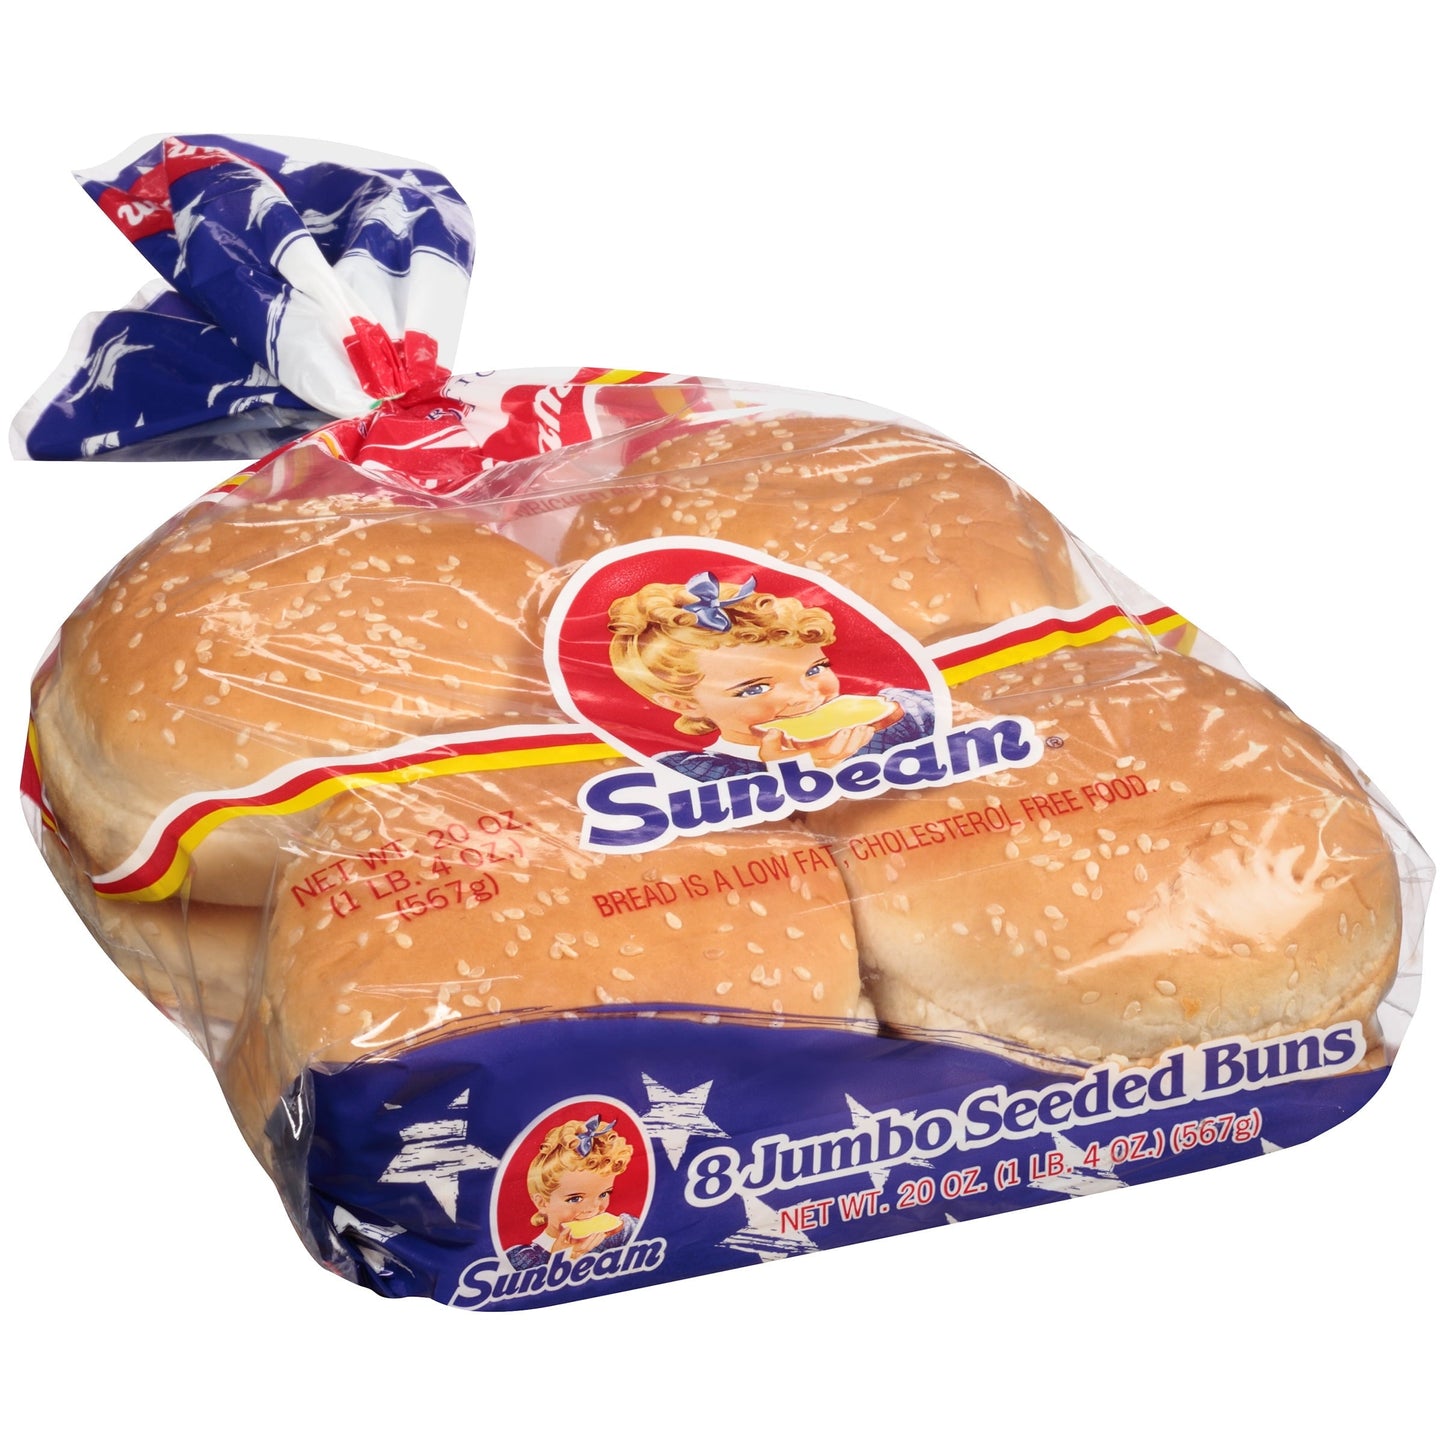 Sunbeam® Enriched Jumbo Seeded Sandwich Rolls 8 ct Bag